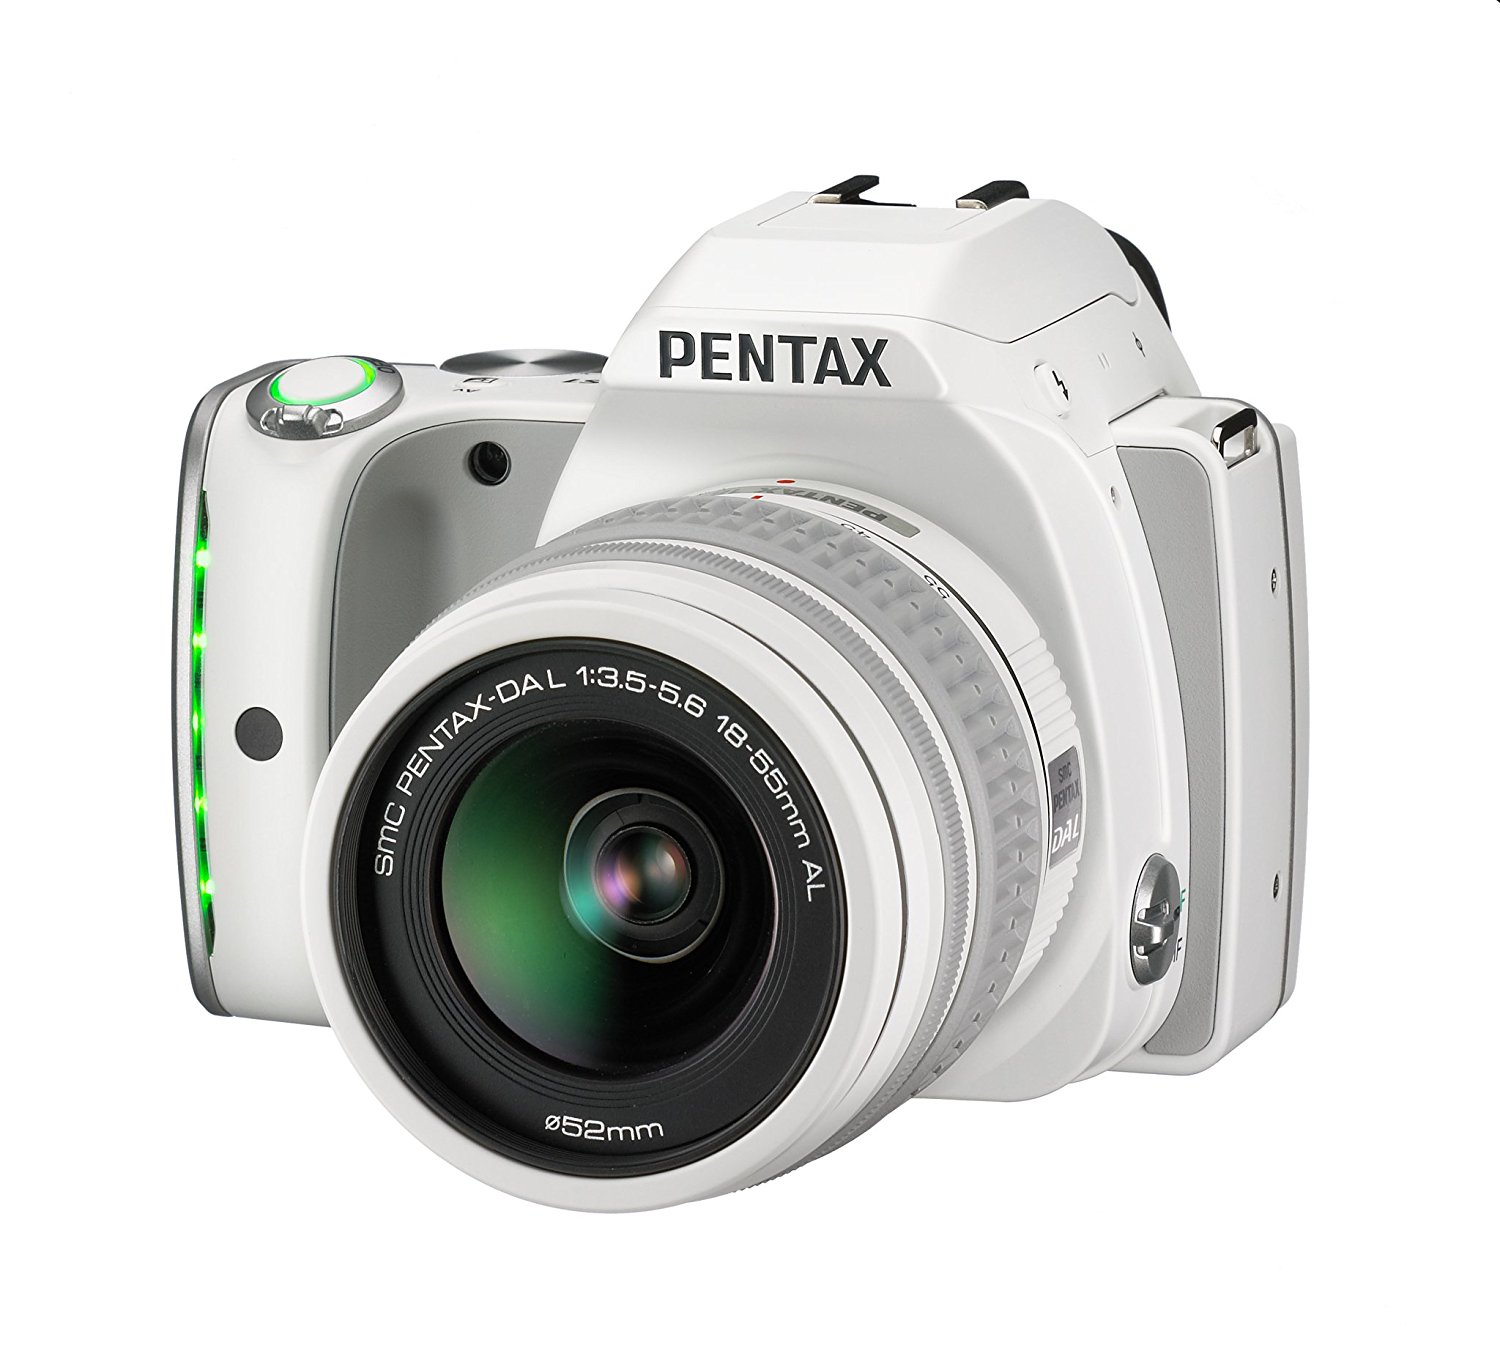 Pentax KS-1 DSLR Camera - White: Amazon.co.uk: Camera & Photo